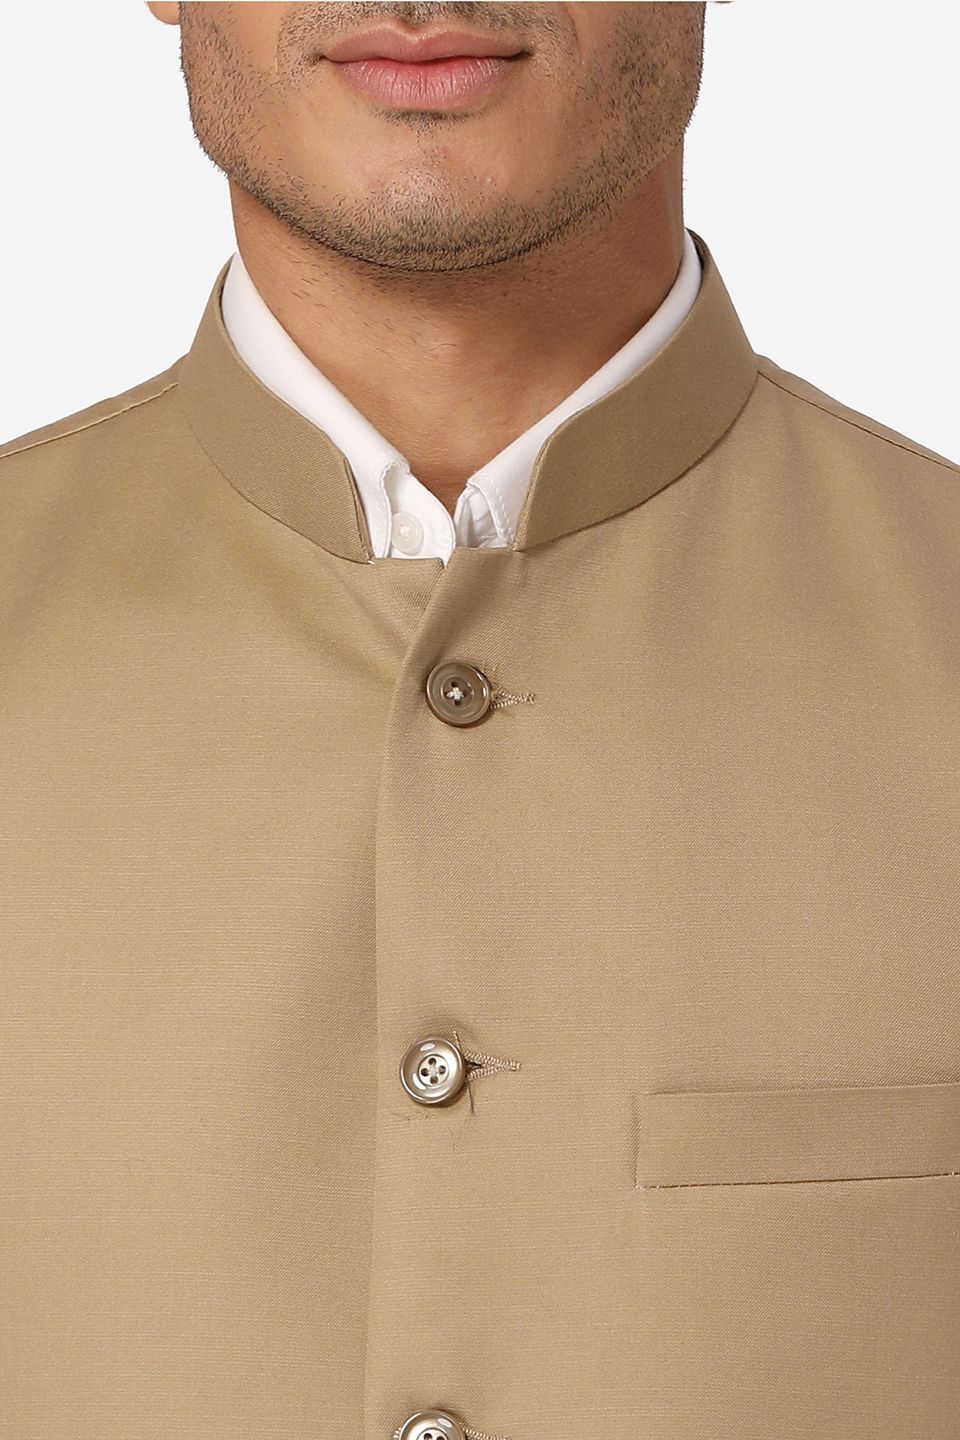 WINTAGE Men's Poly Cotton Casual and Evening Vest & Pant Set : Beige